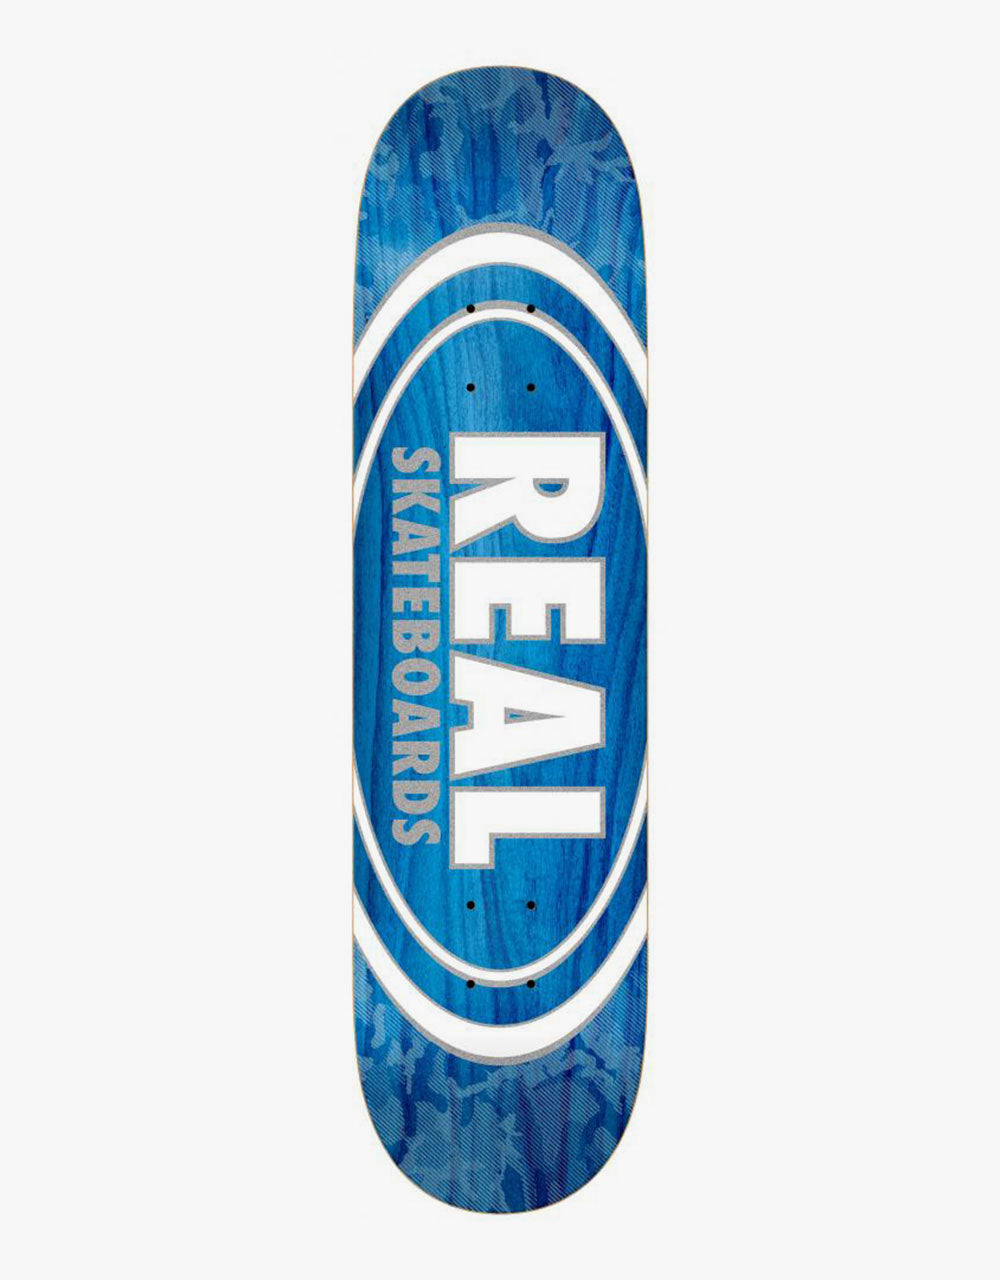 Real Deck Oval Patterns Team Series Skateboard Deck - 8.06"